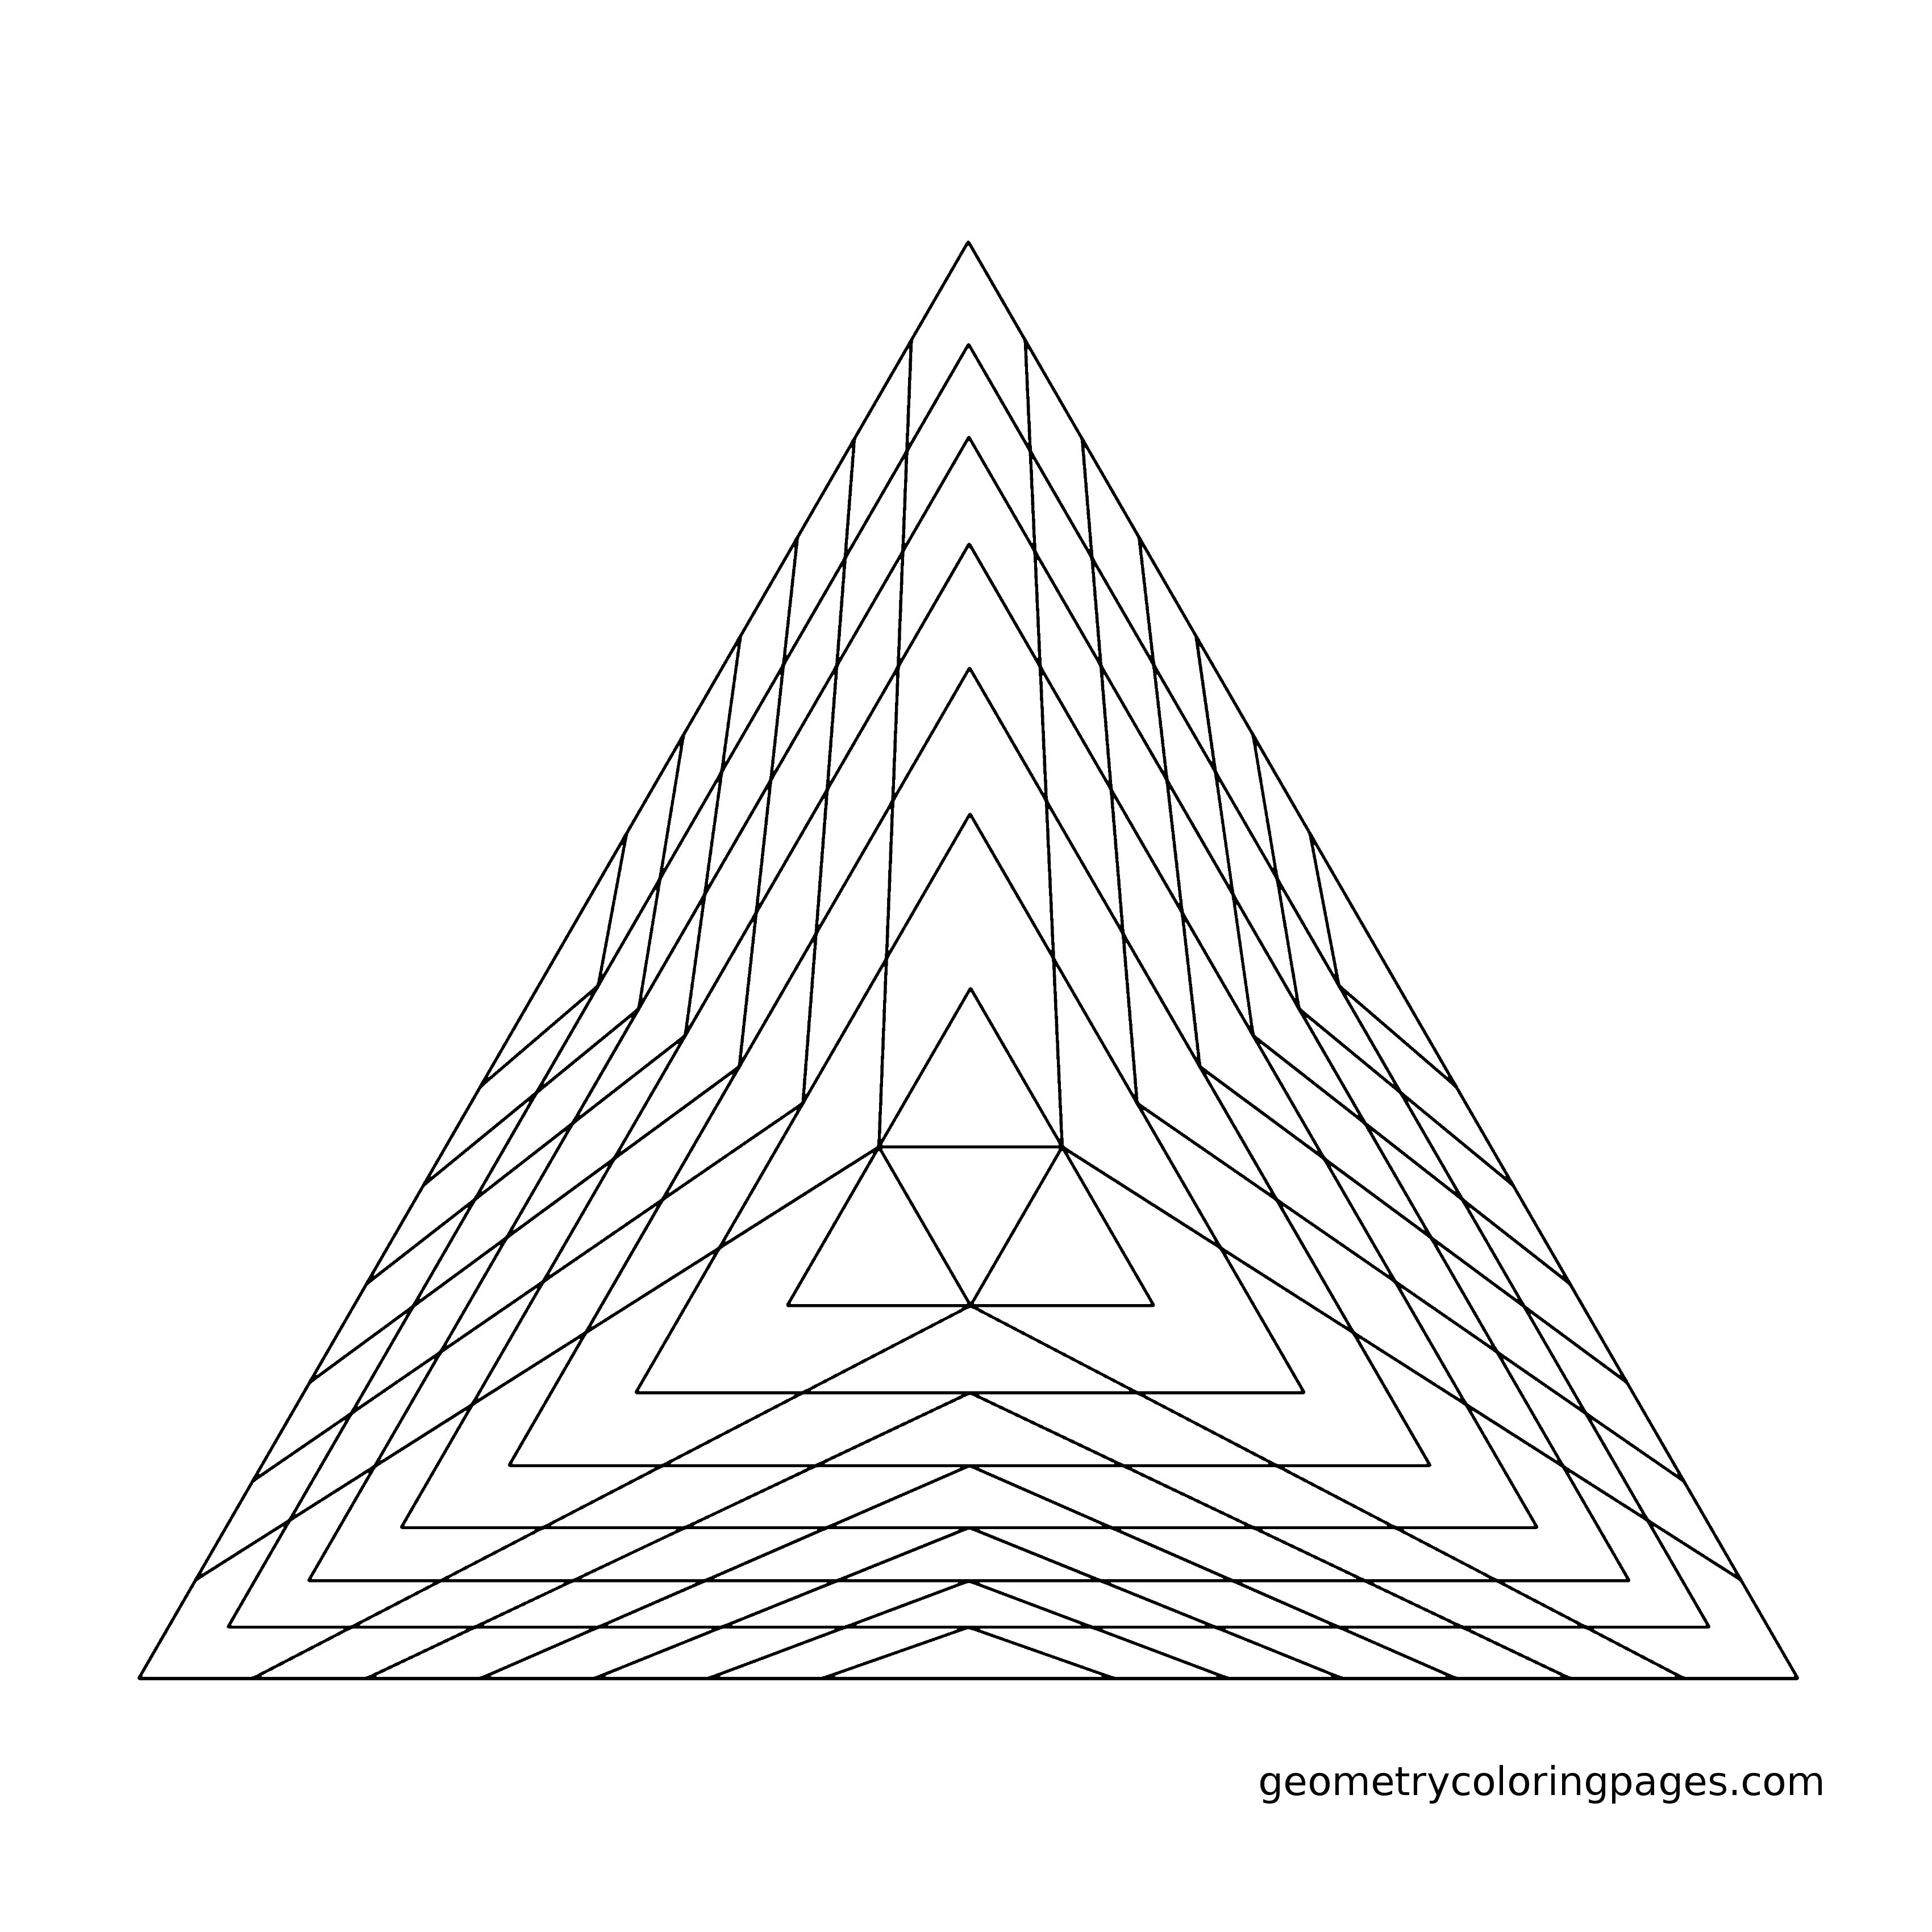 Pyramid Coloring Page at GetColorings.com | Free printable colorings